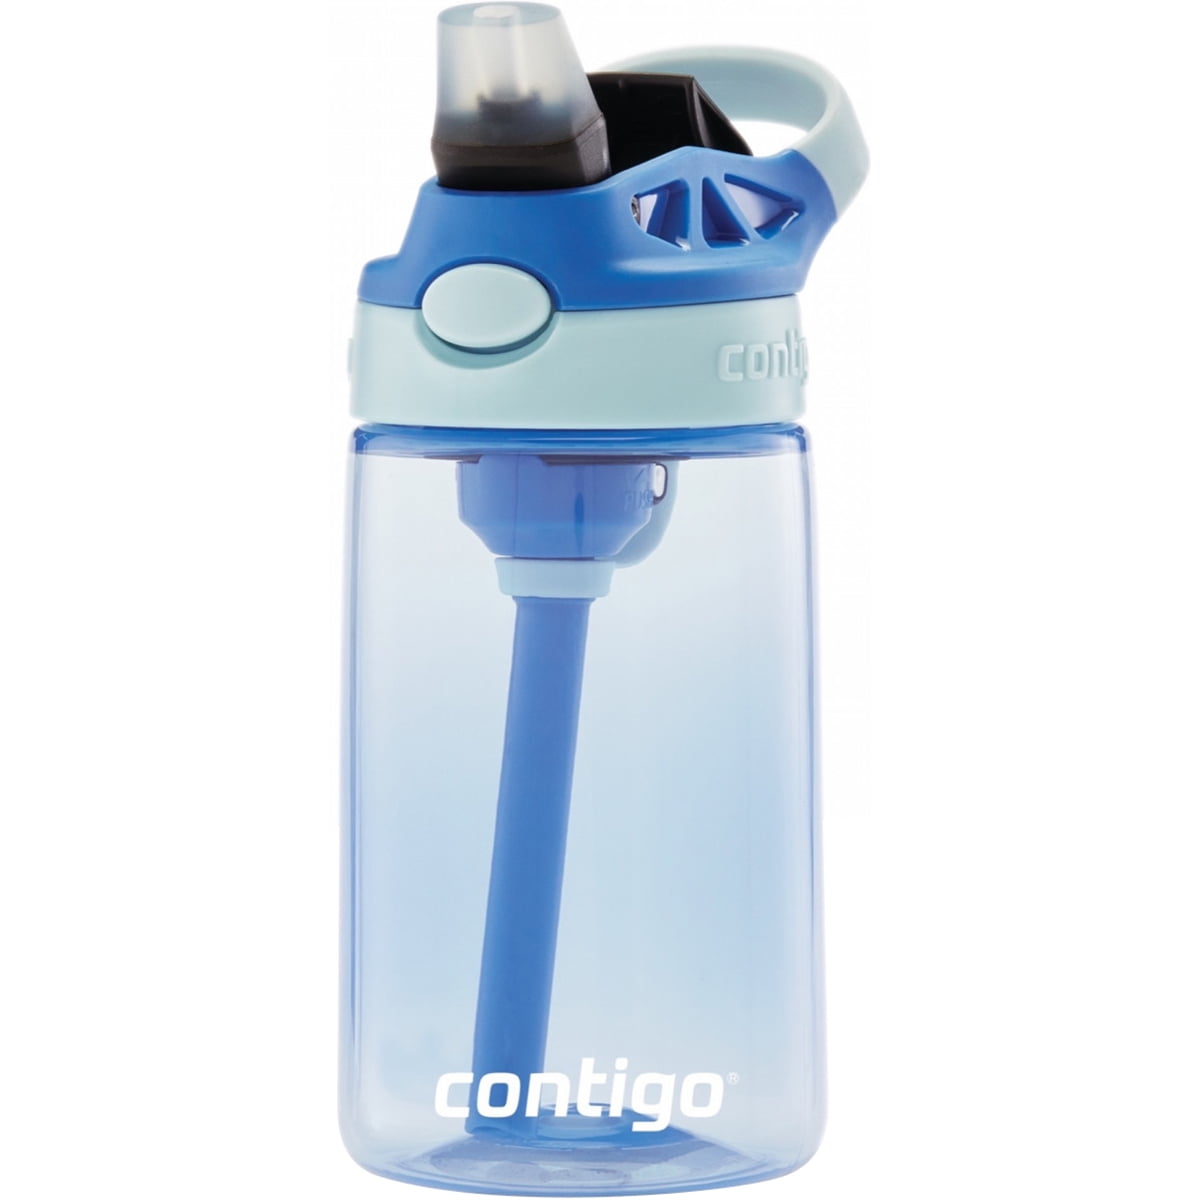 Contigo Kid's 14 oz. Aubrey Plastic Water Bottle - Juniper/Scooters